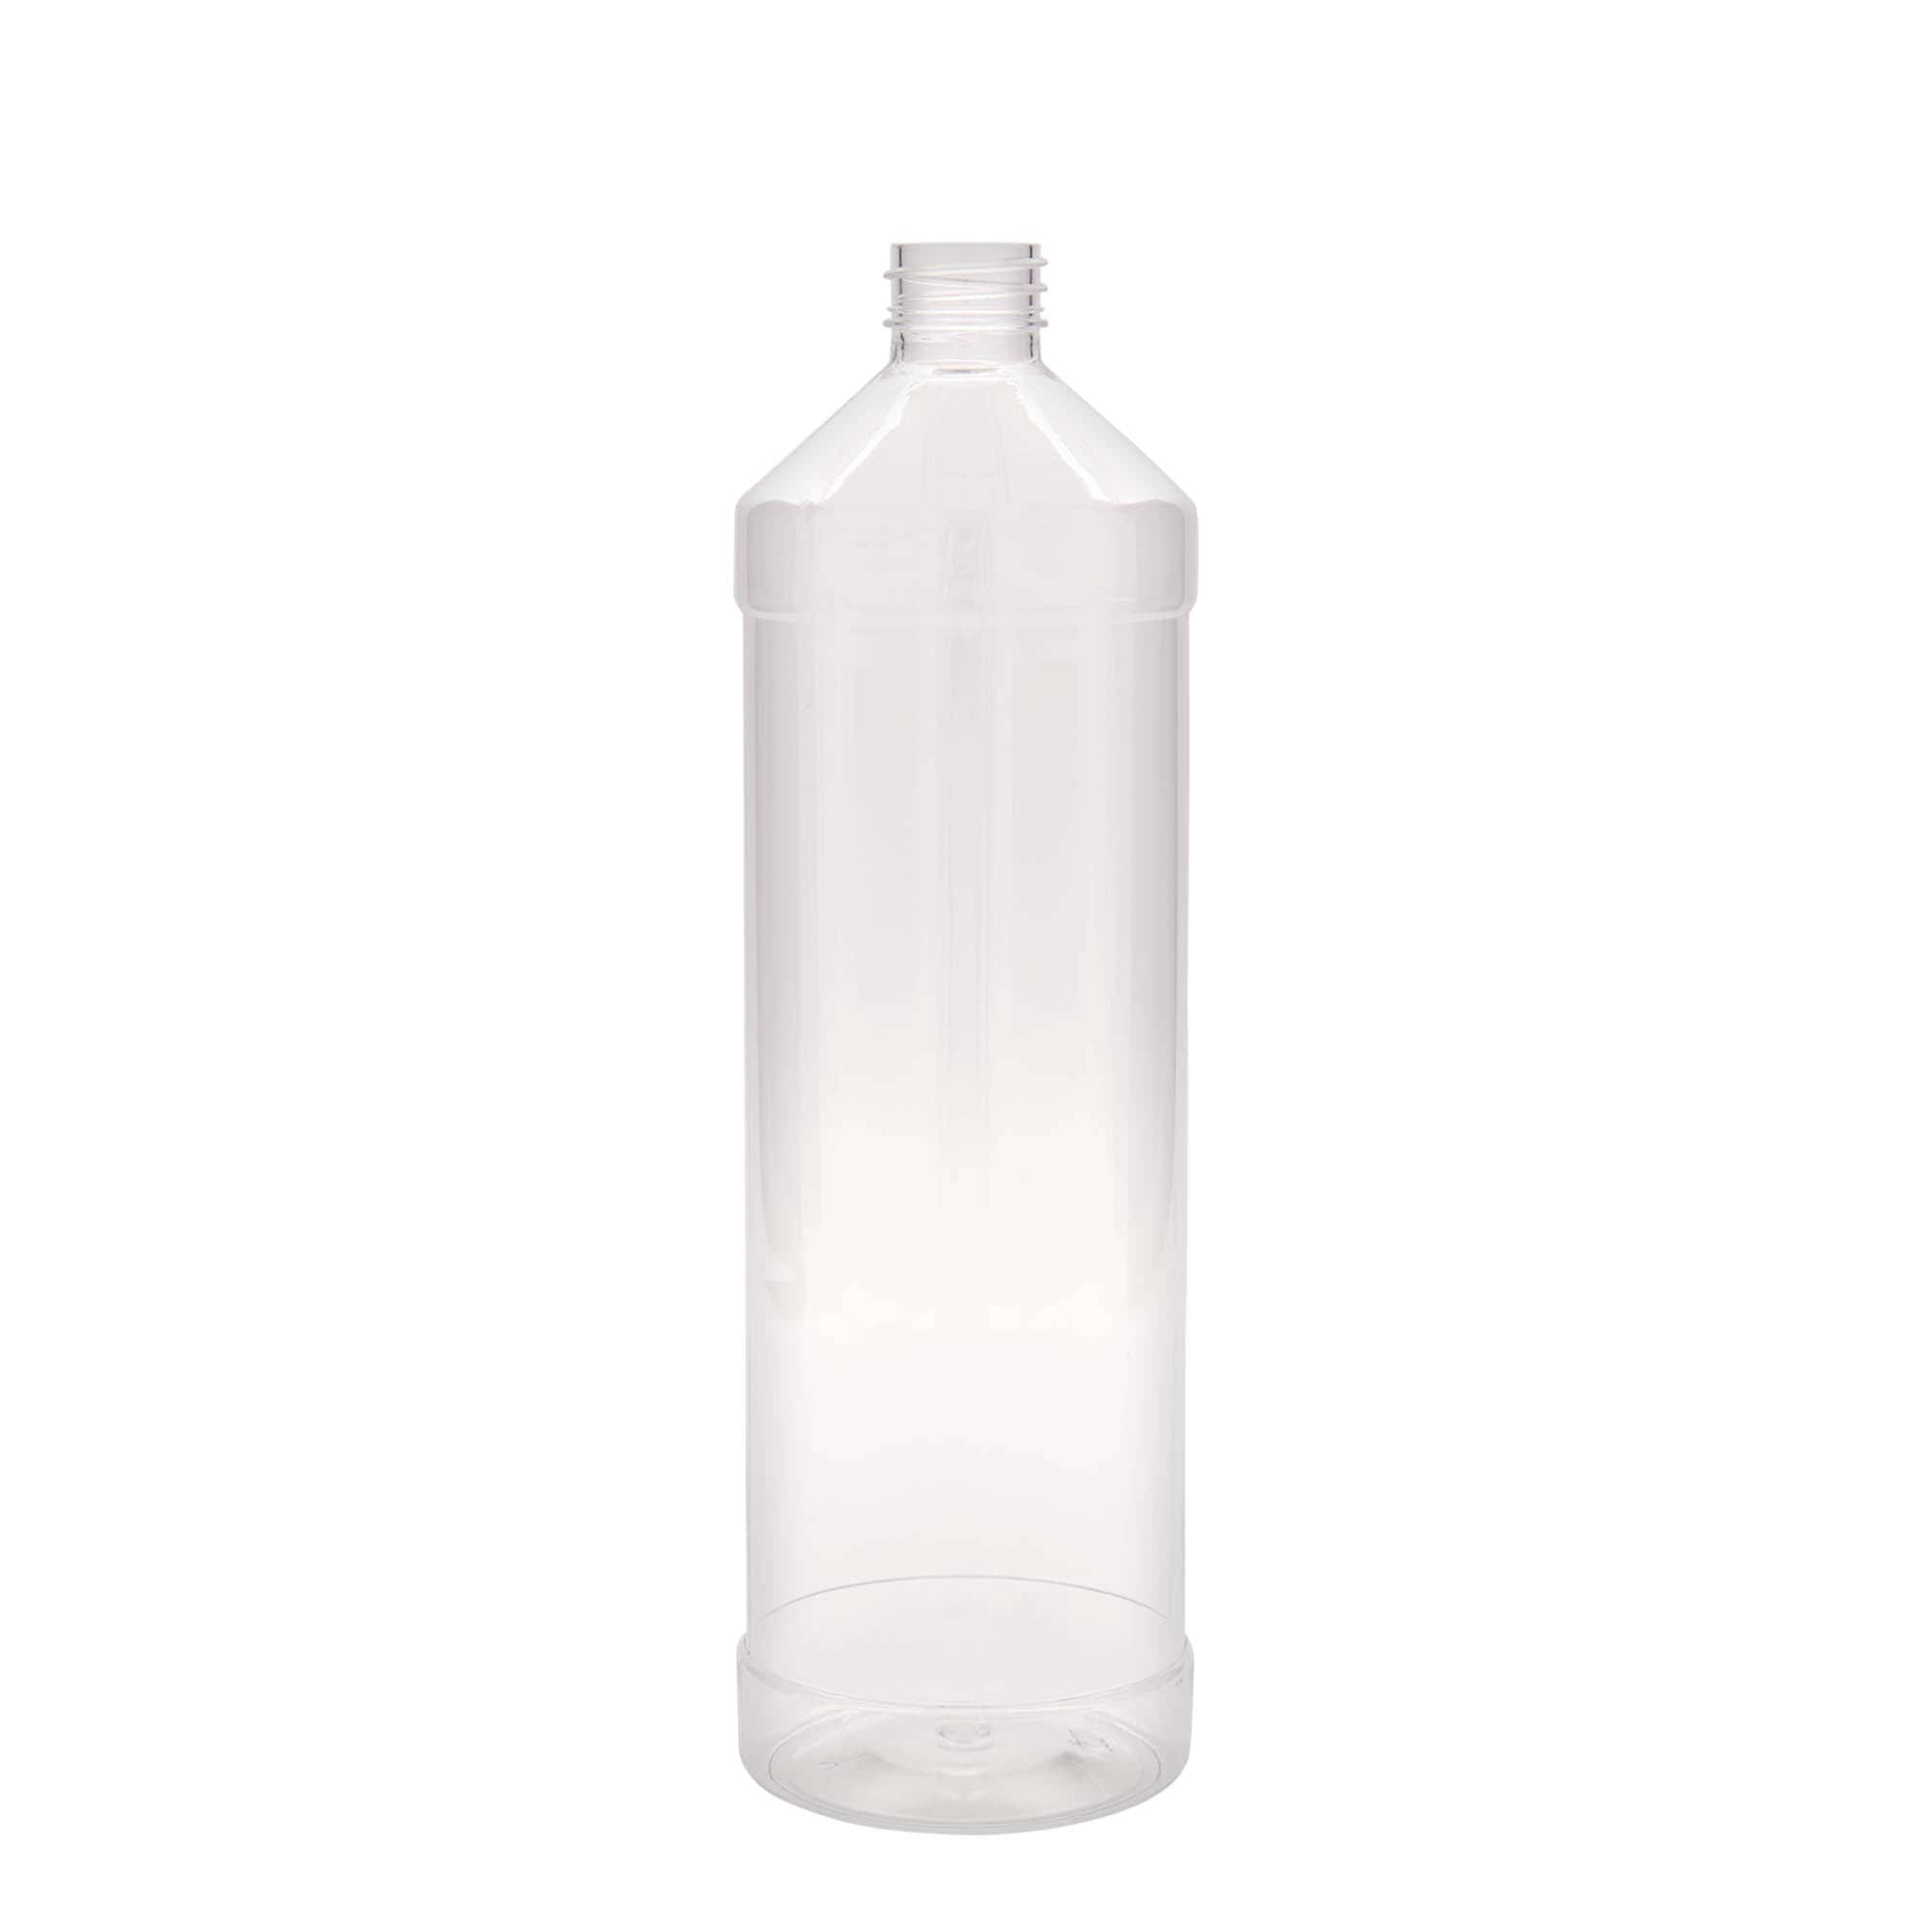 1,000 ml PET bottle 'Everytime', plastic, closure: GPI 28/410